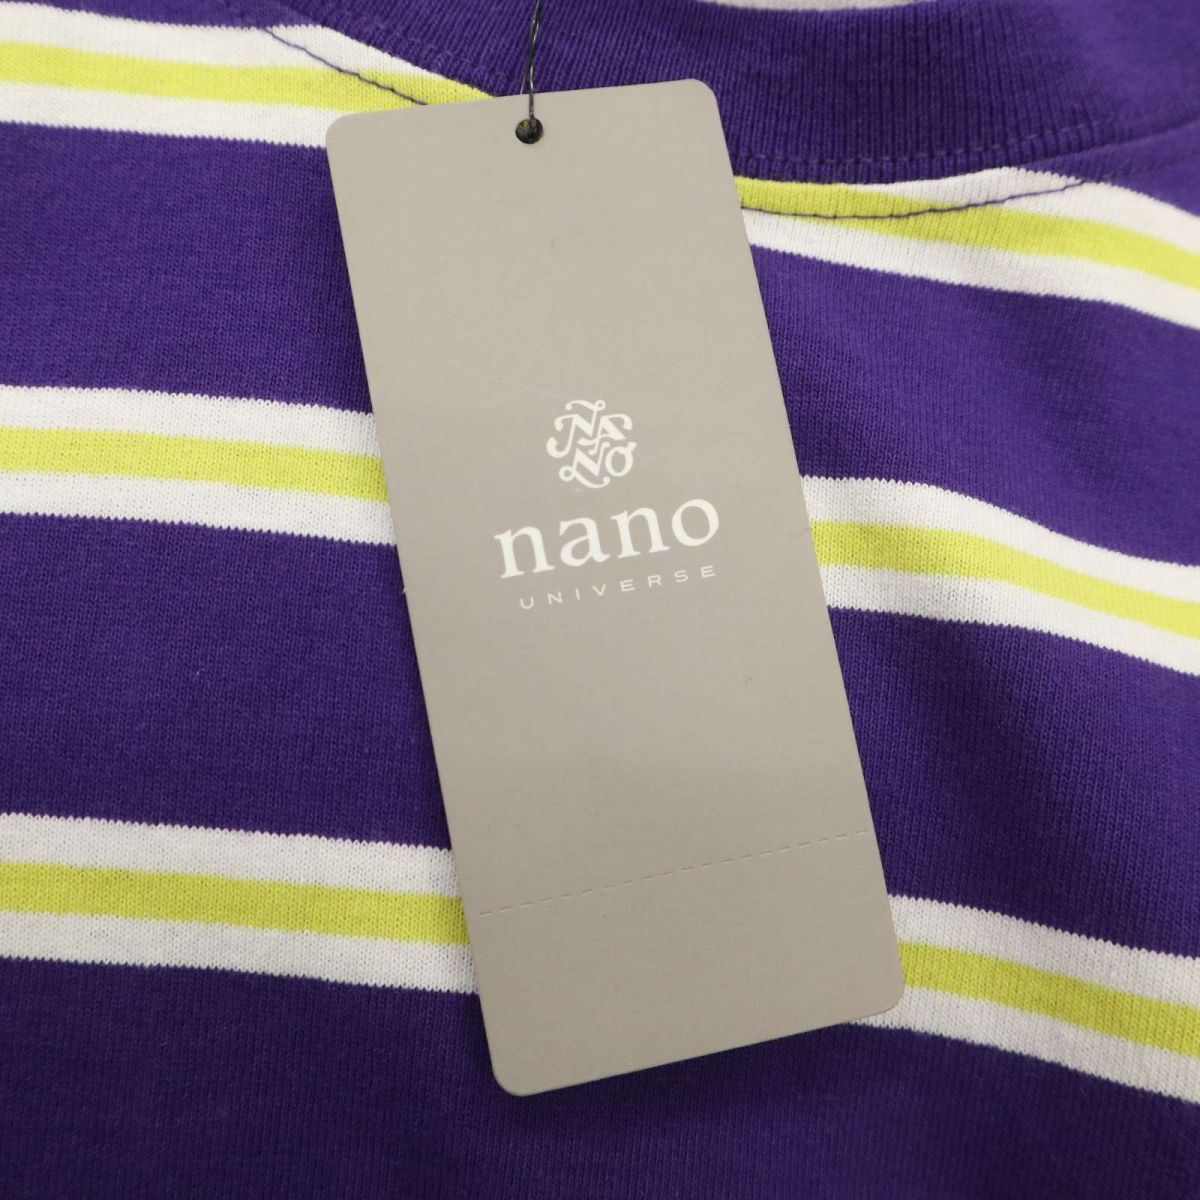 [ новый товар не использовался ] nano universe Nano Universe длинный рукав вырез лодочкой мульти- окантовка * cut and sewn long футболка Sz.L мужской C4T00753_1#F